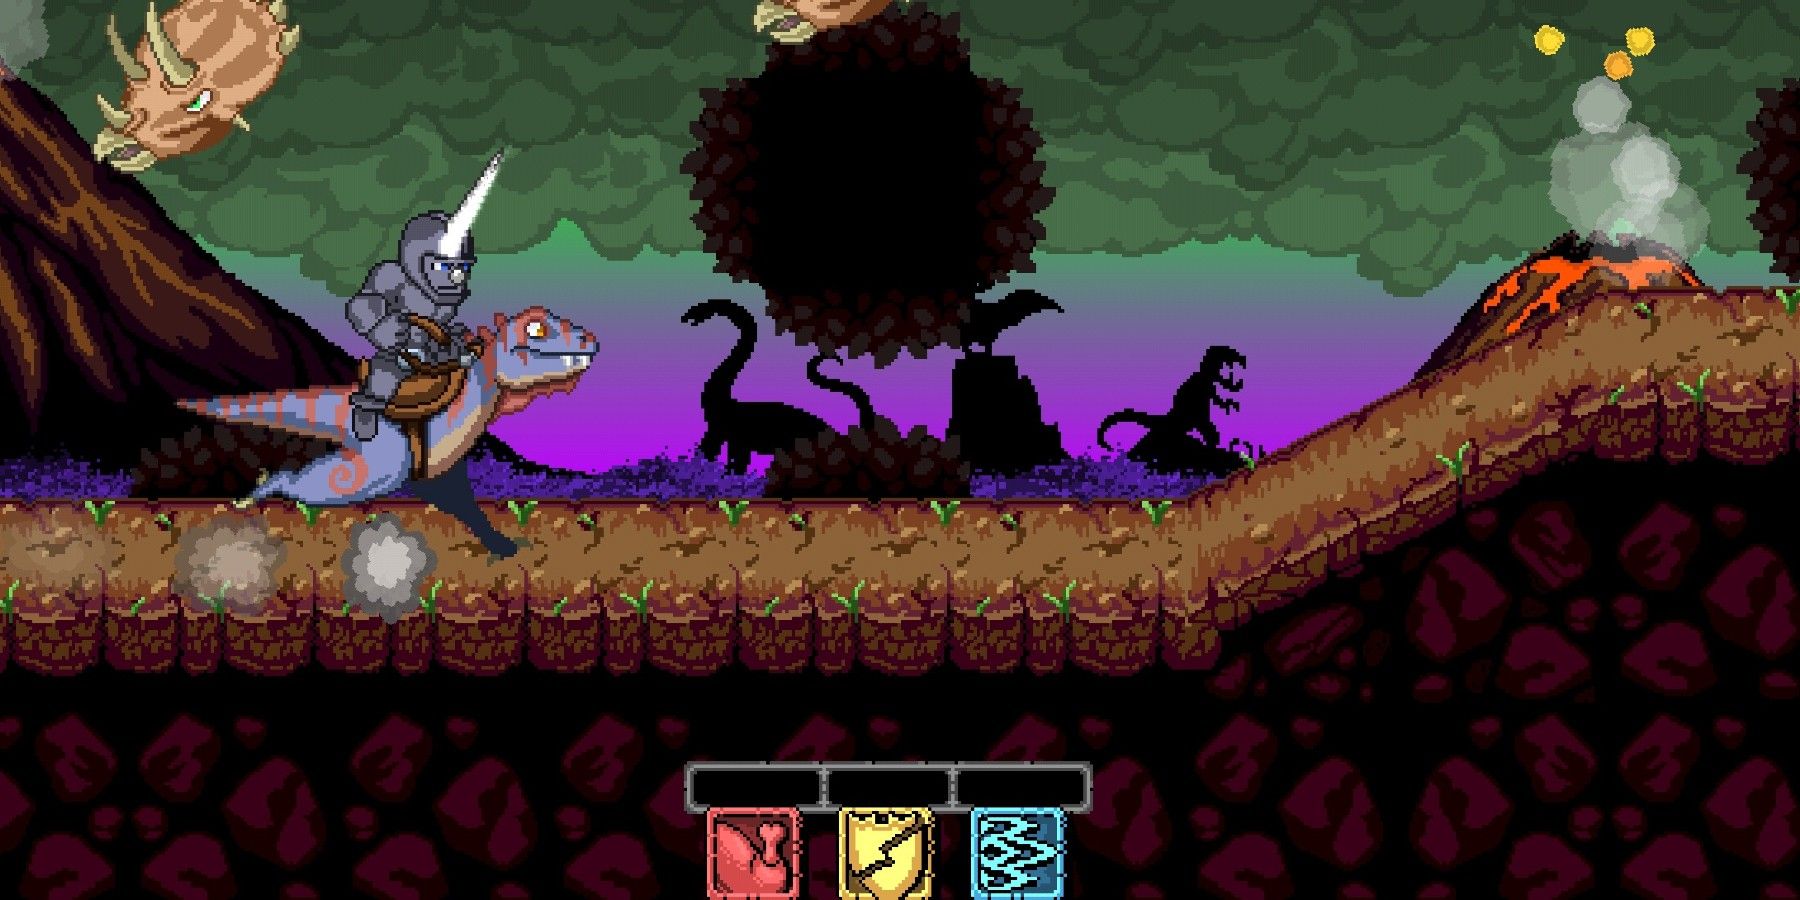 Punch Quest game knight on dinosaur running through jurassic setting